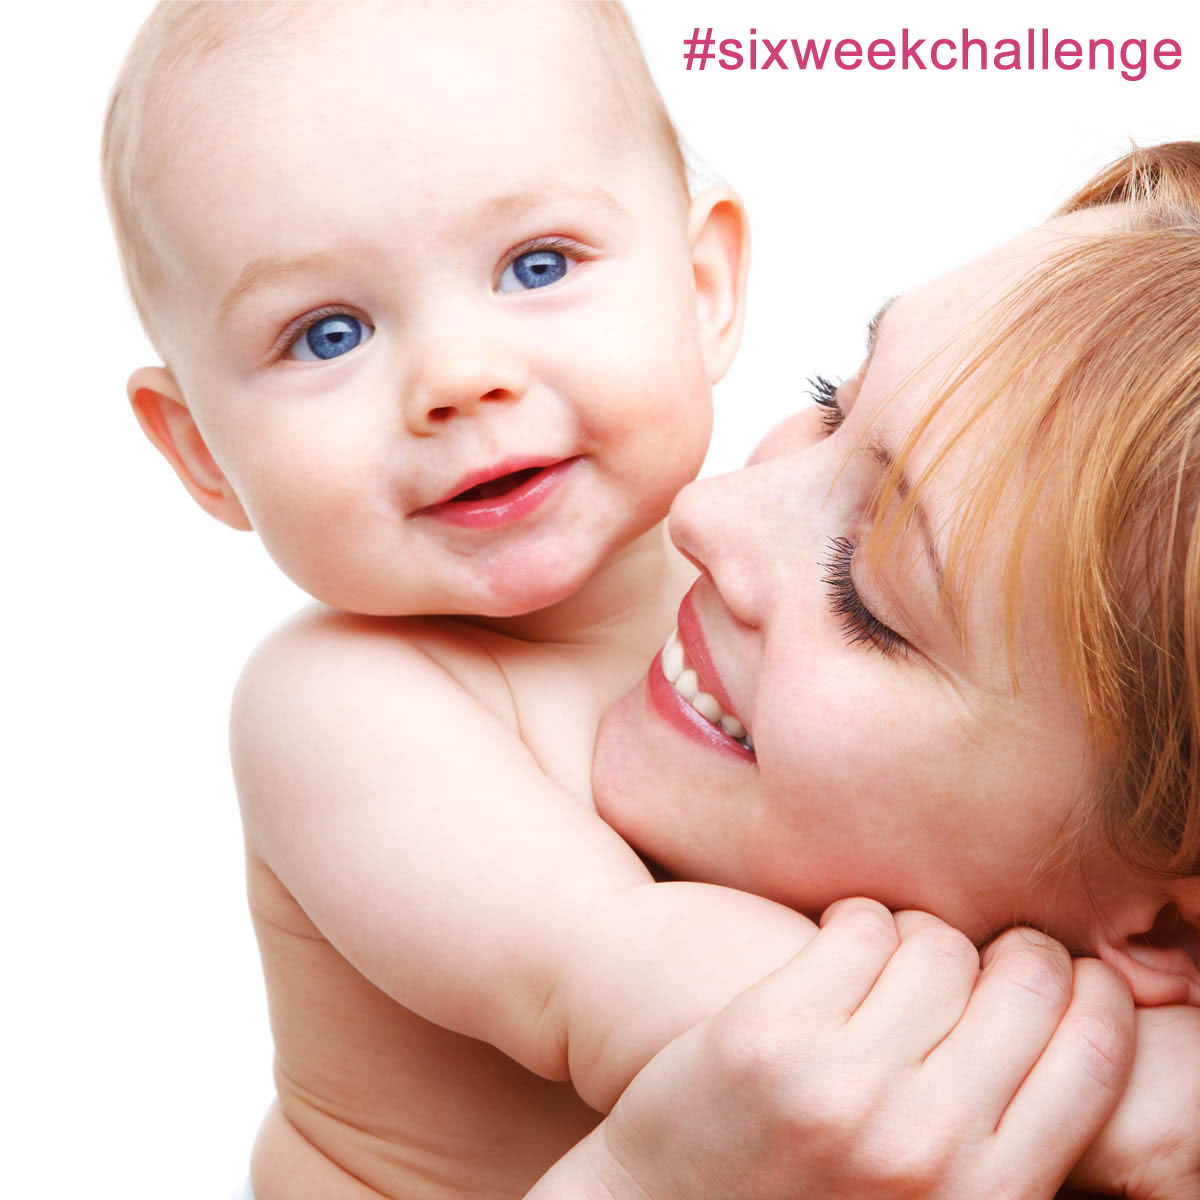 Breastfeeding Challenge Lancashire County Council